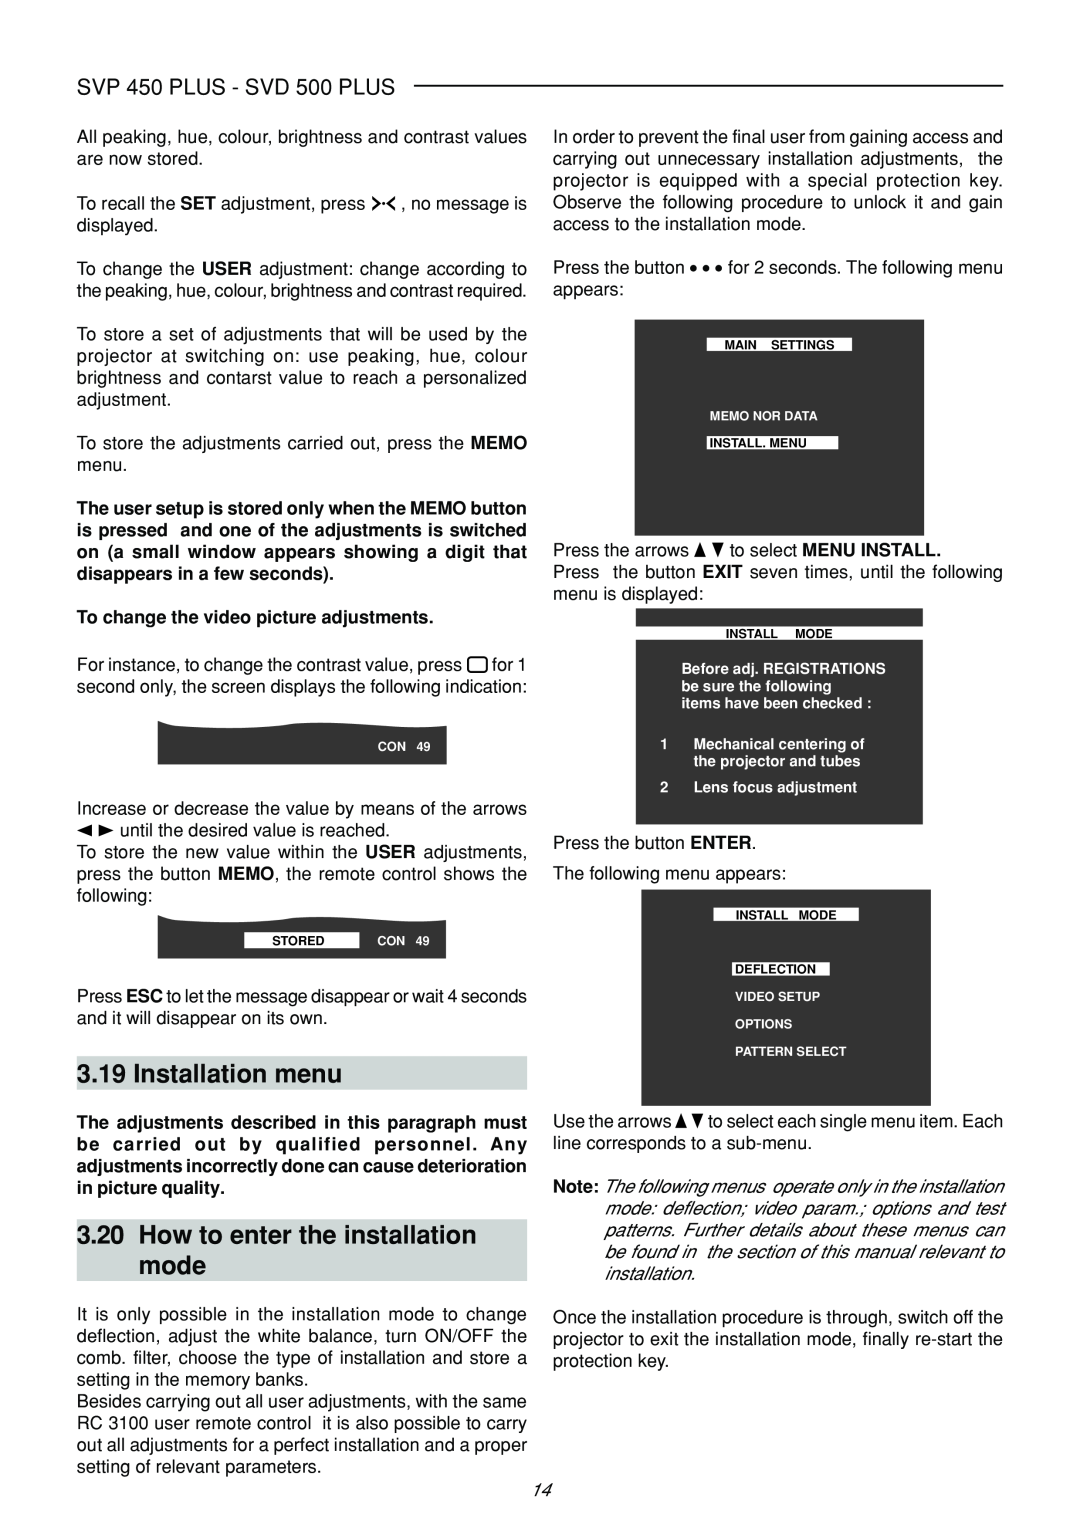 Sim2 Multimedia SVP 420 HB manual Installation menu, How to enter the installation mode, SVP 450 PLUS - SVD 500 PLUS 